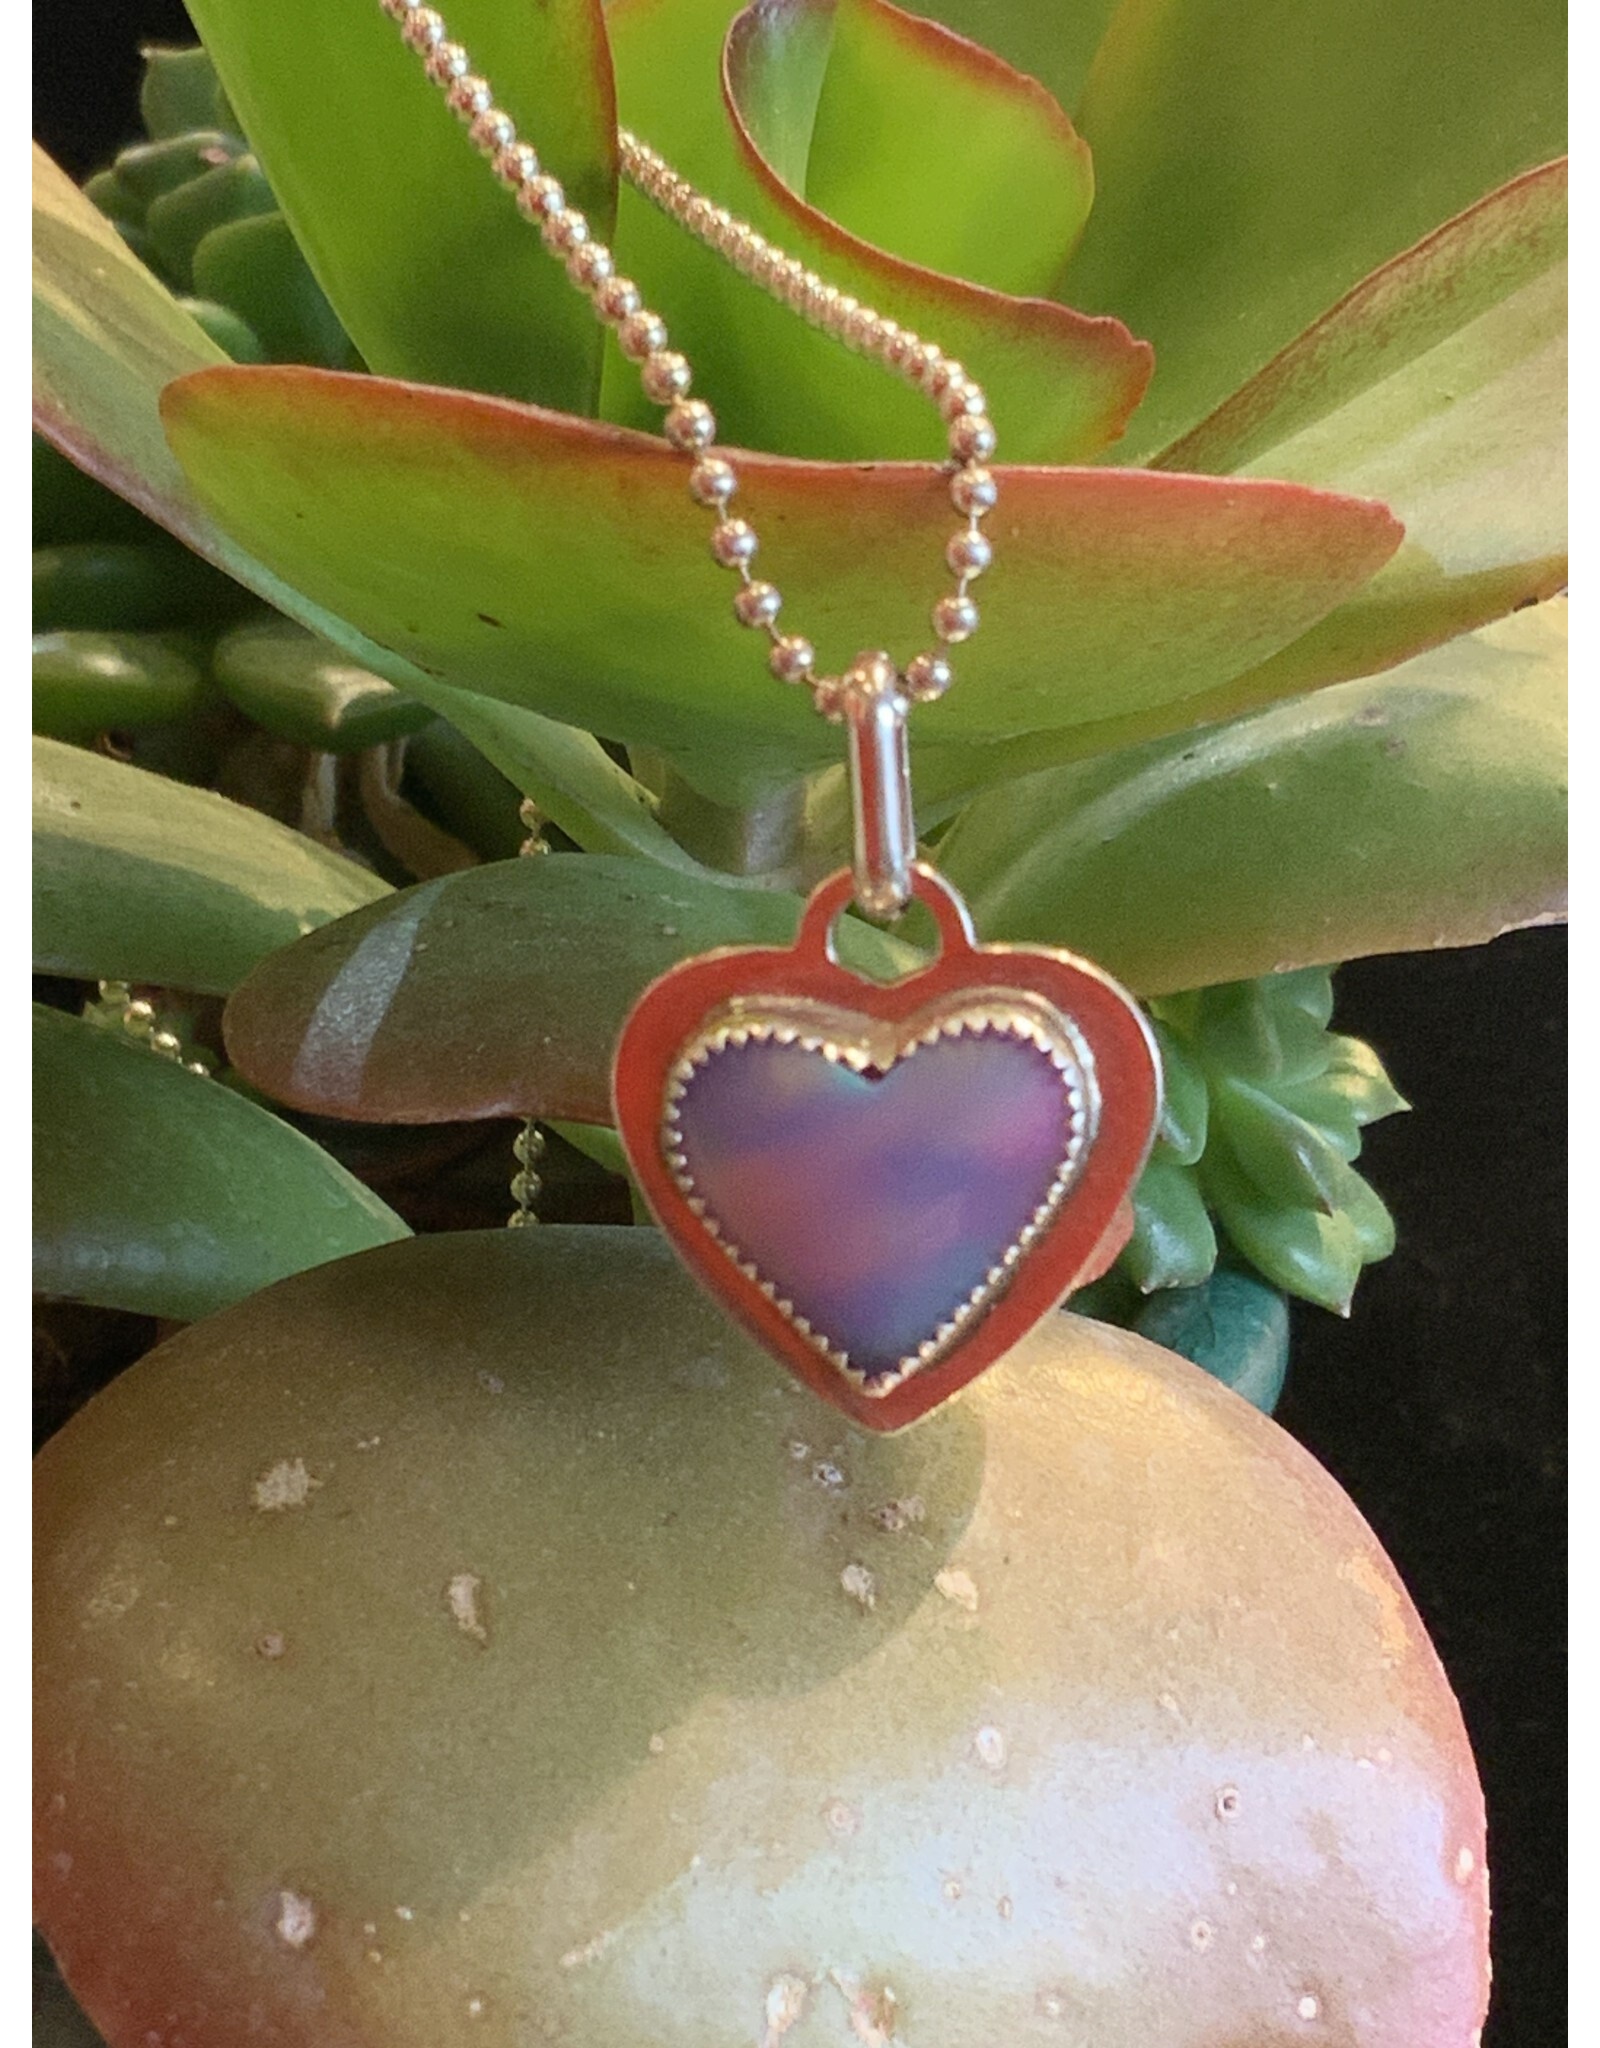 Annette Colby - Jeweler Necklace Nova Opal Heart & Sterling Silver - AC